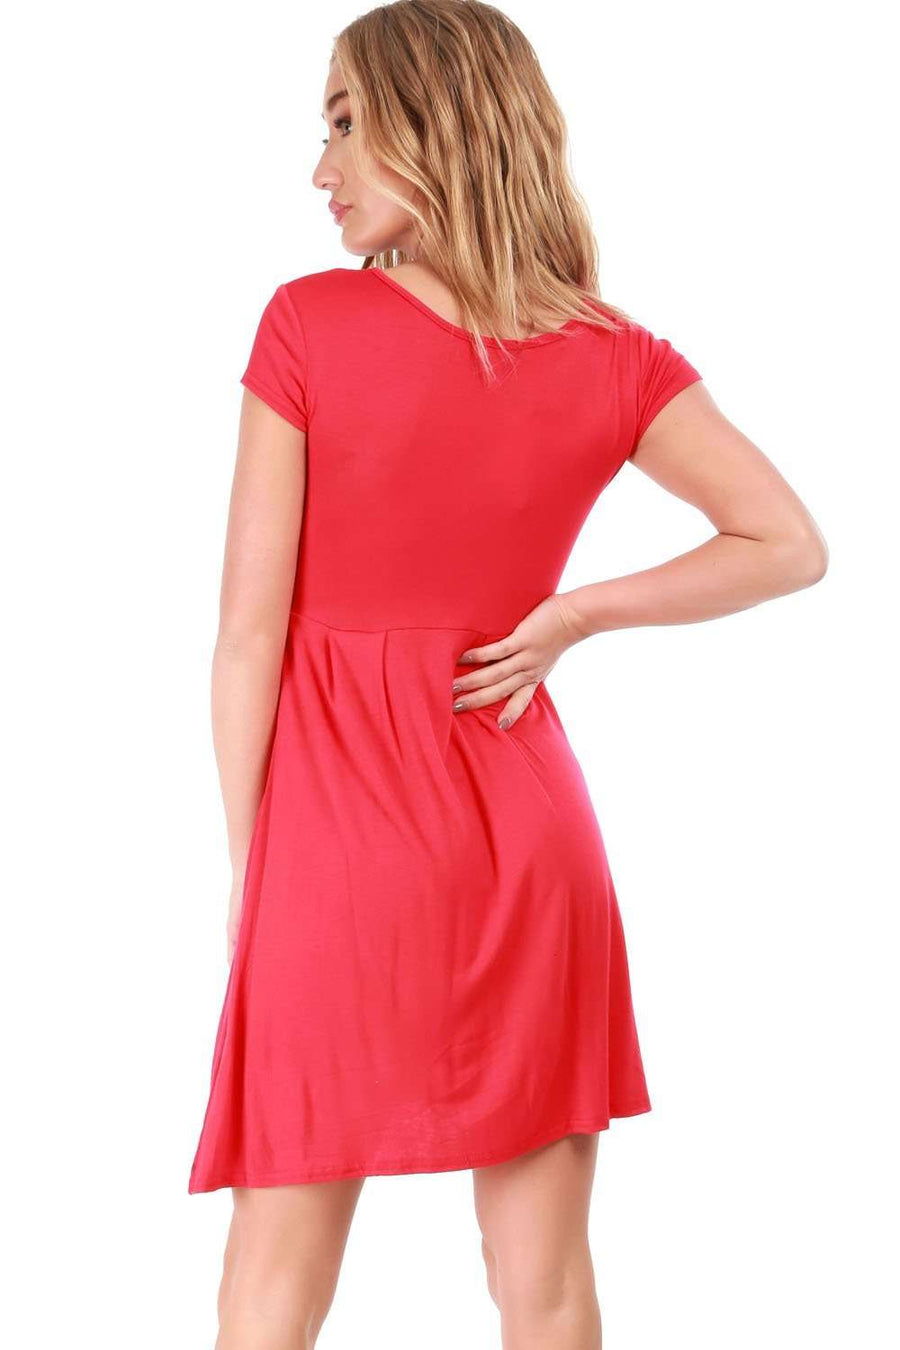 Cadie V Neck Basic Jersey Mini Swing Dress - bejealous-com